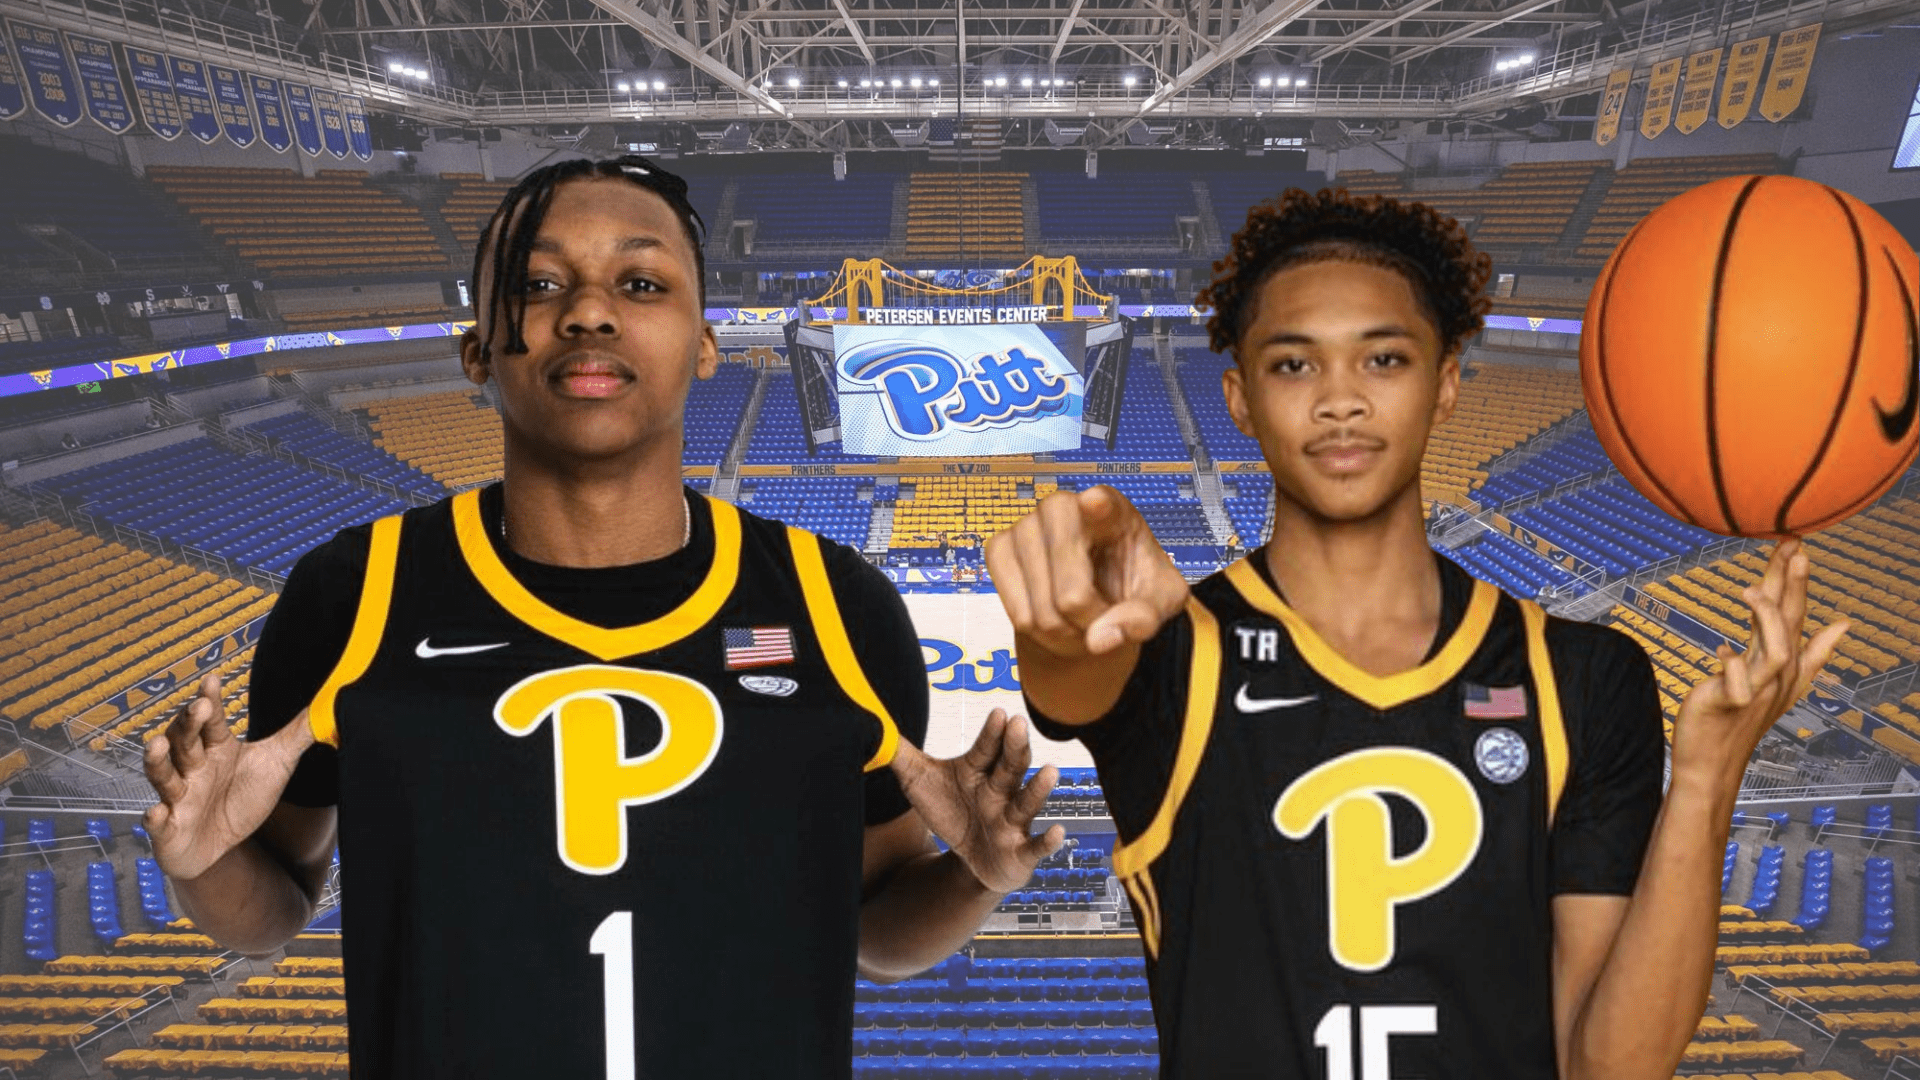 Pitt Basketball freshmen guard duo of Carlton Carrington and Jaland Lowe